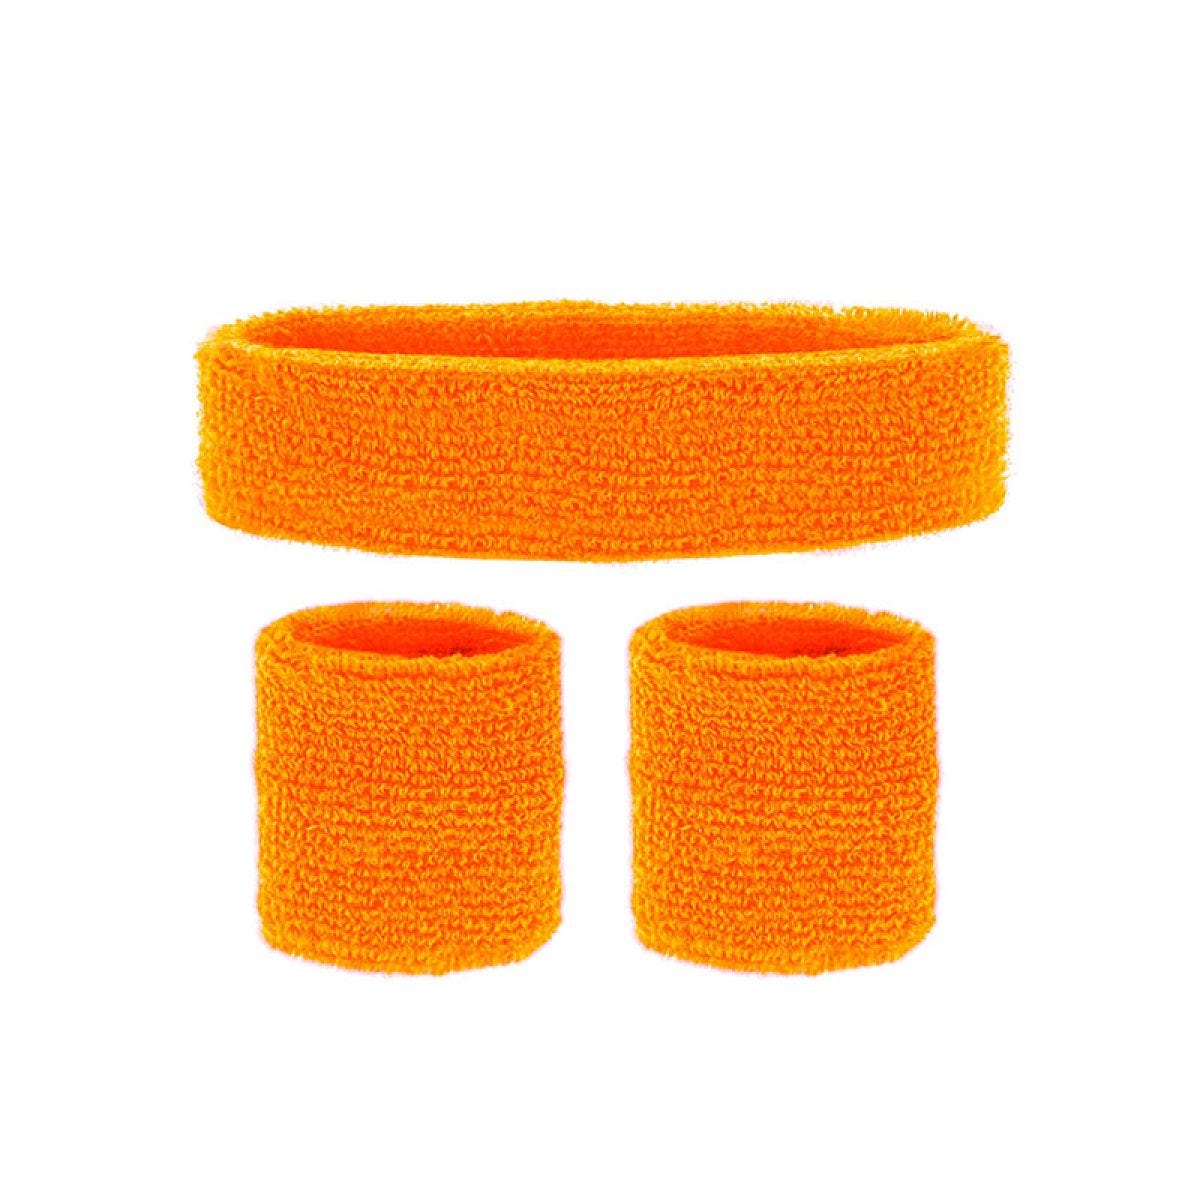 Orange Sweatband Accessory Kit